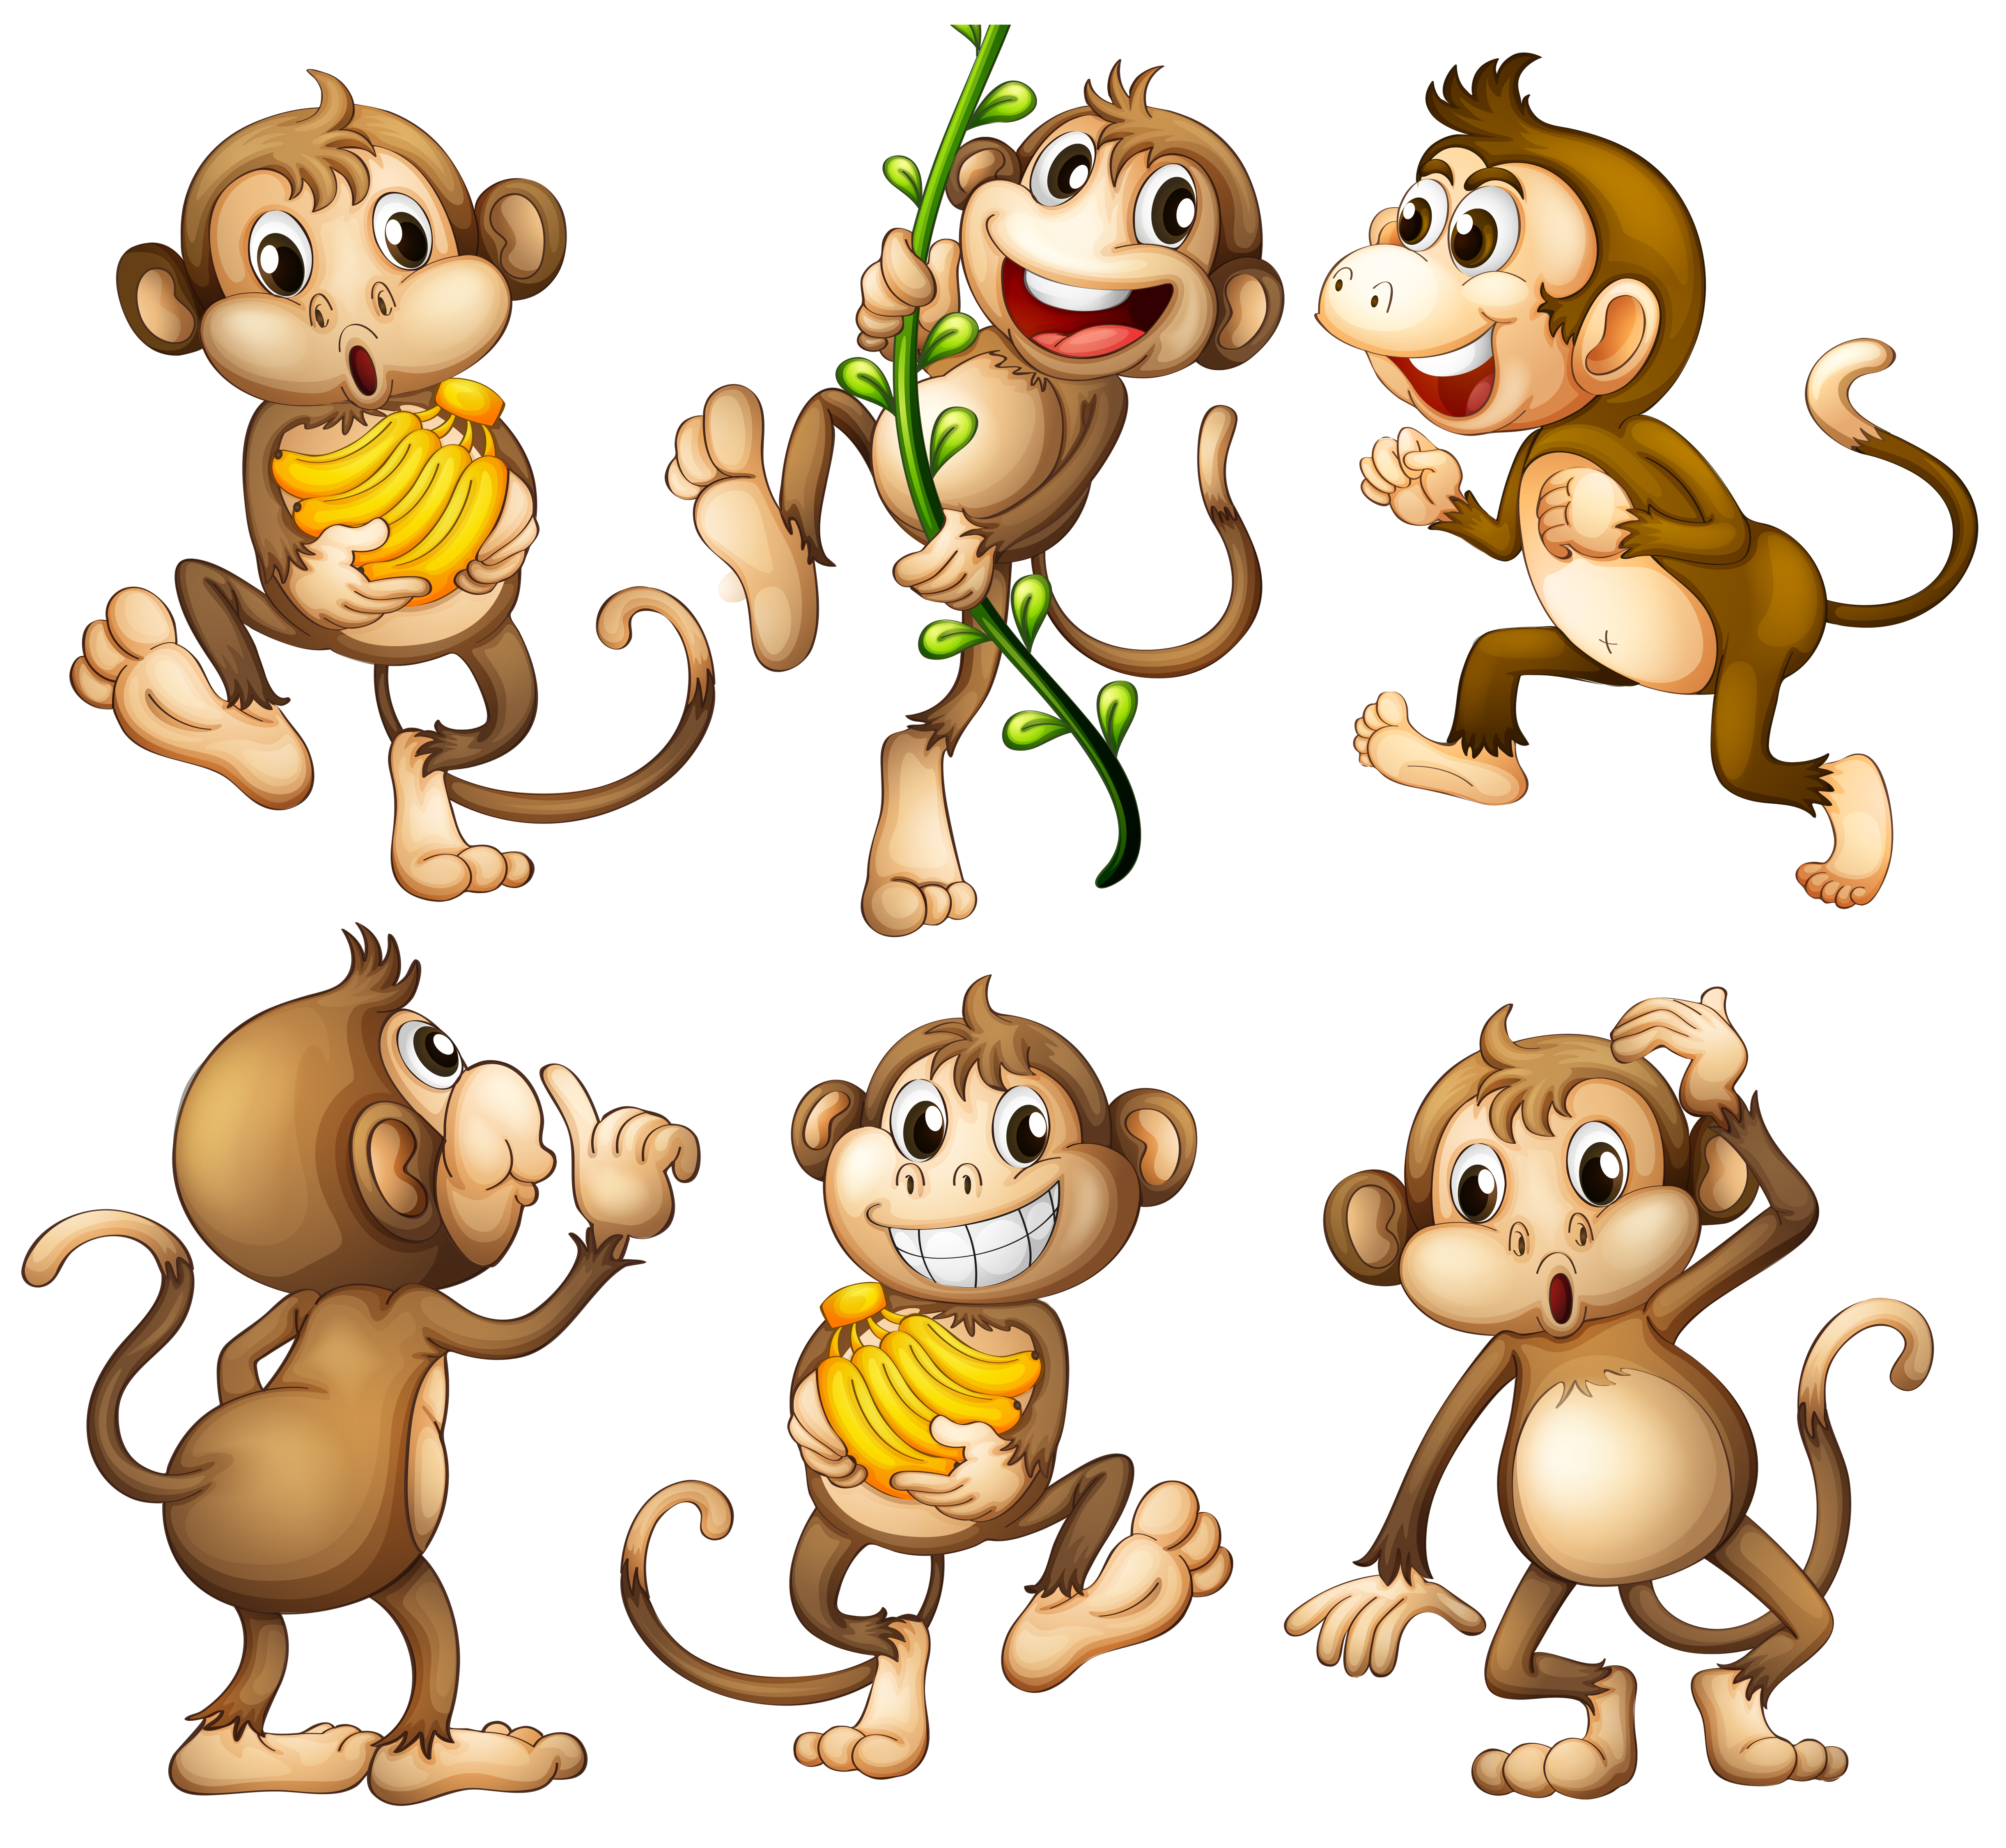 Download Playful wild monkeys - Download Free Vectors, Clipart ...